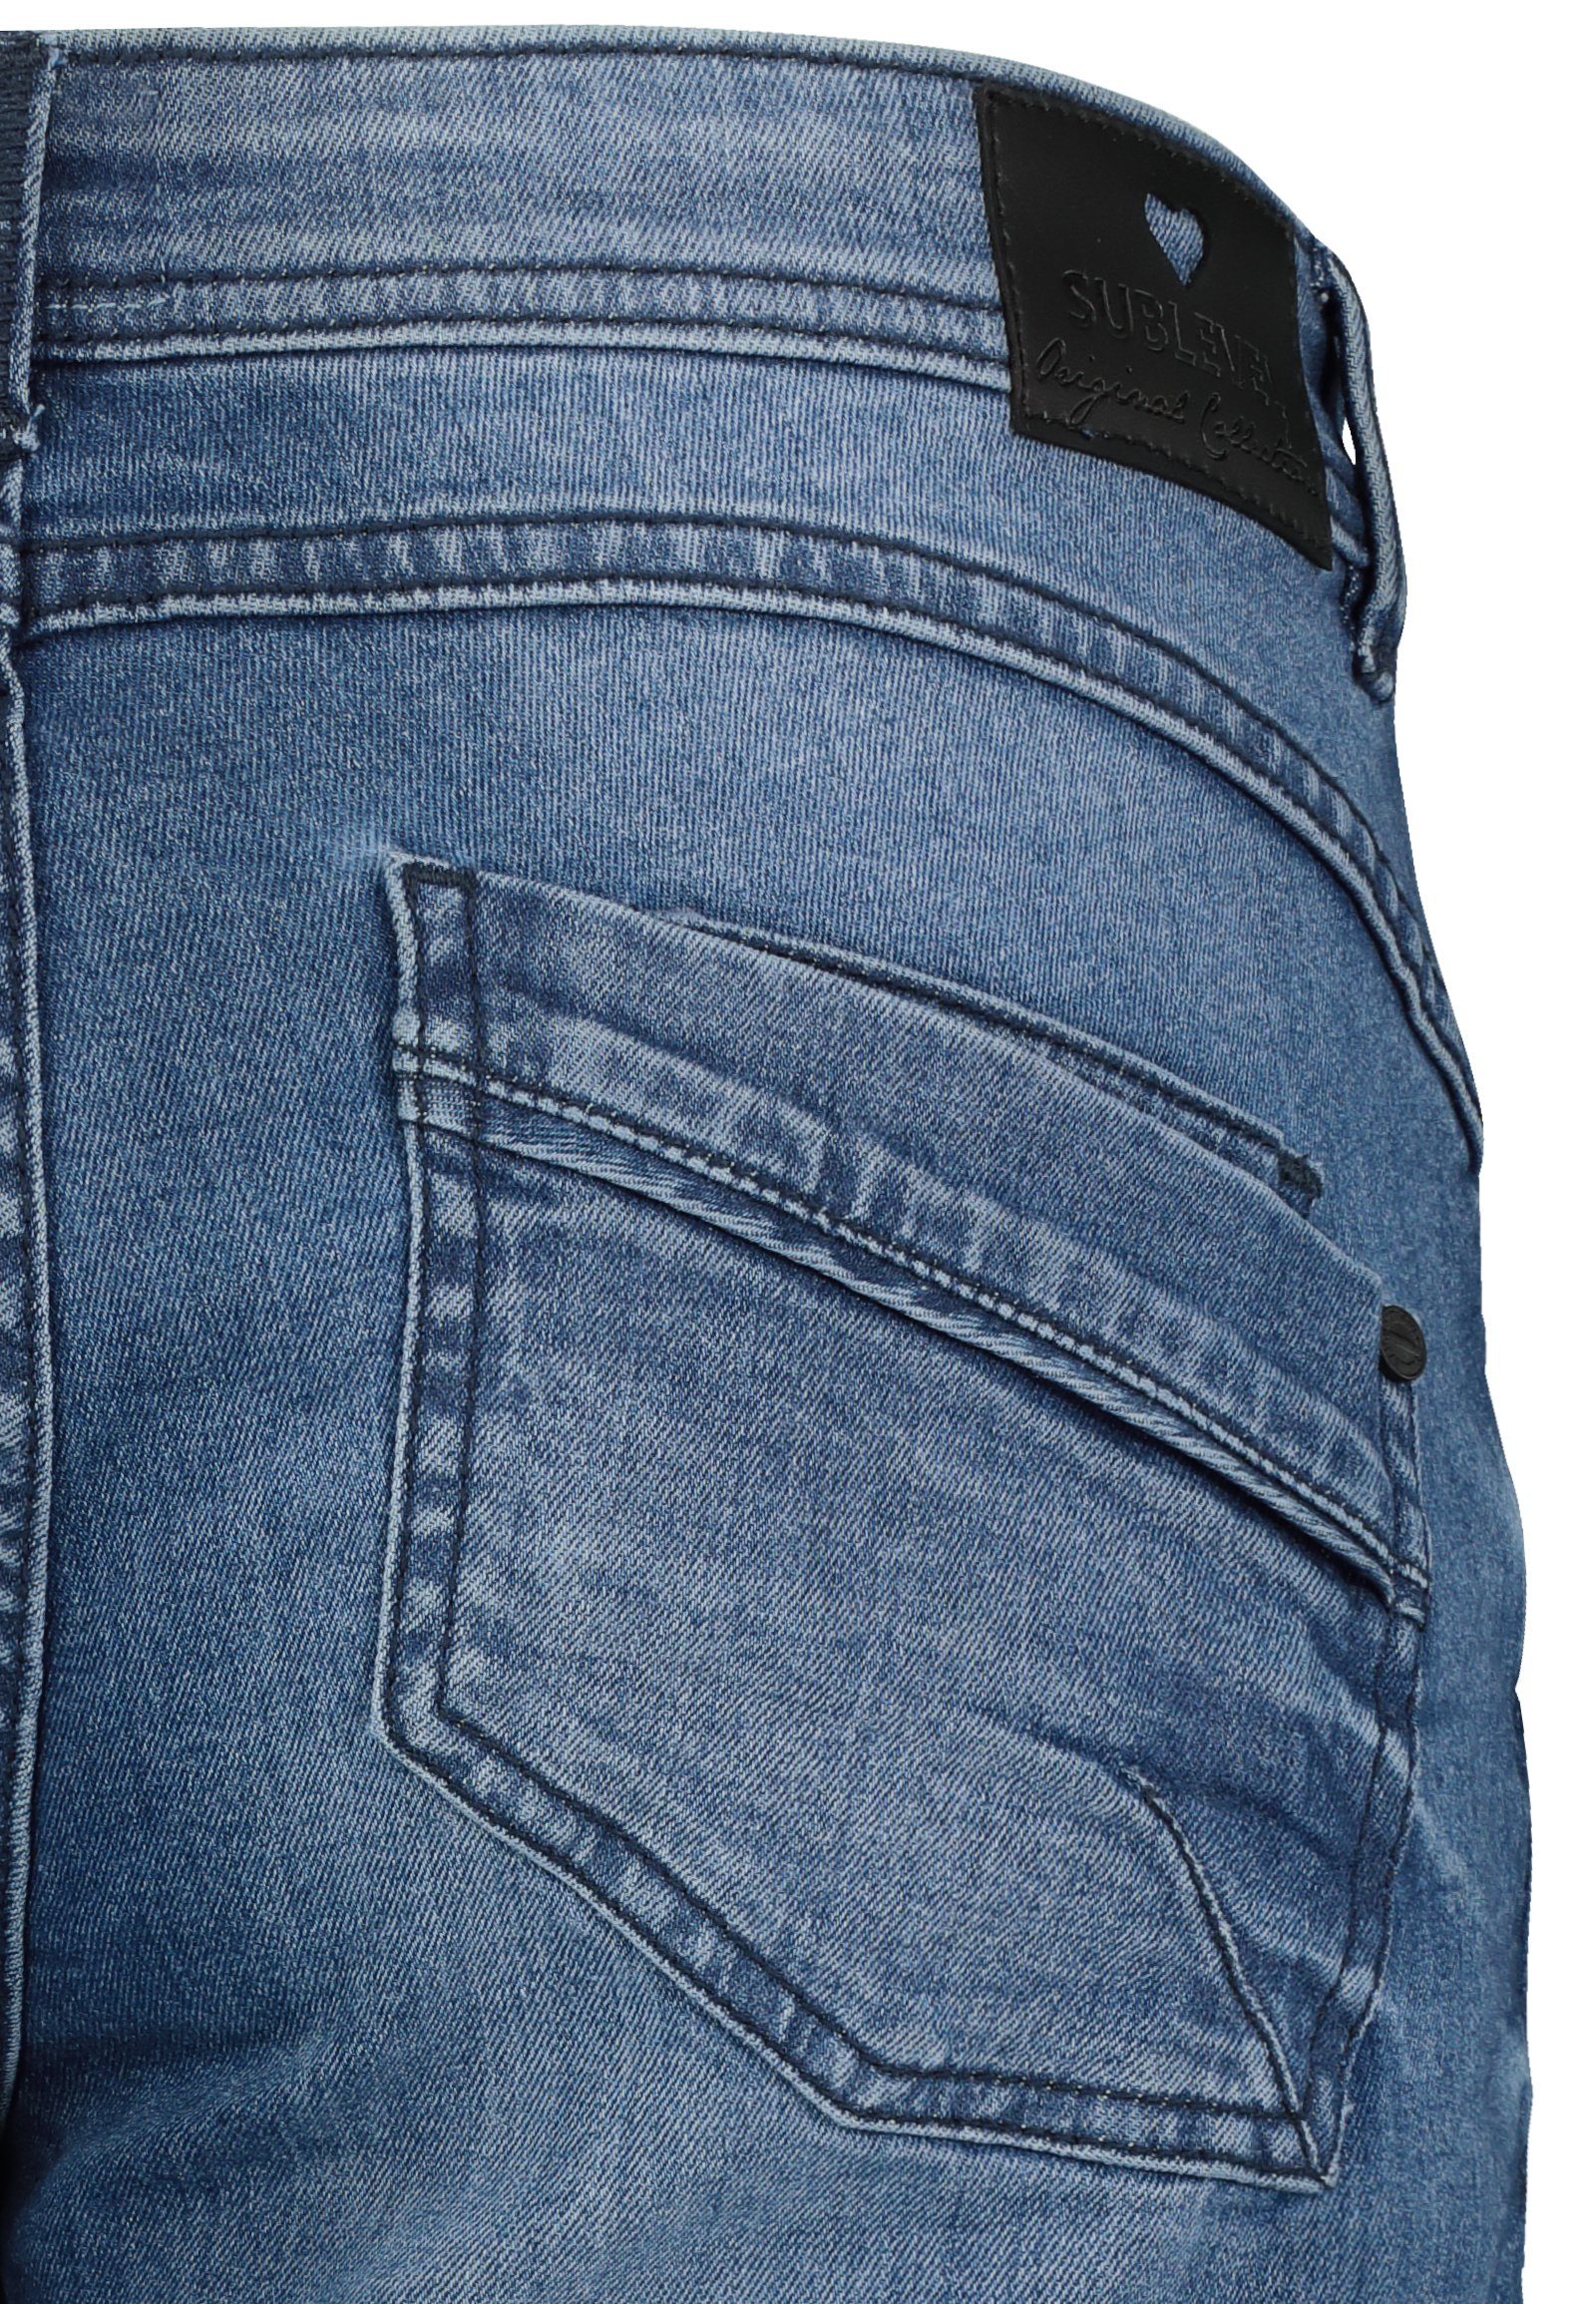 SUBLEVEL Bermudas Denim Middle Damen Jeans Short Denim Hose Kurze Stretch Blue Shorts Shorts Bermuda